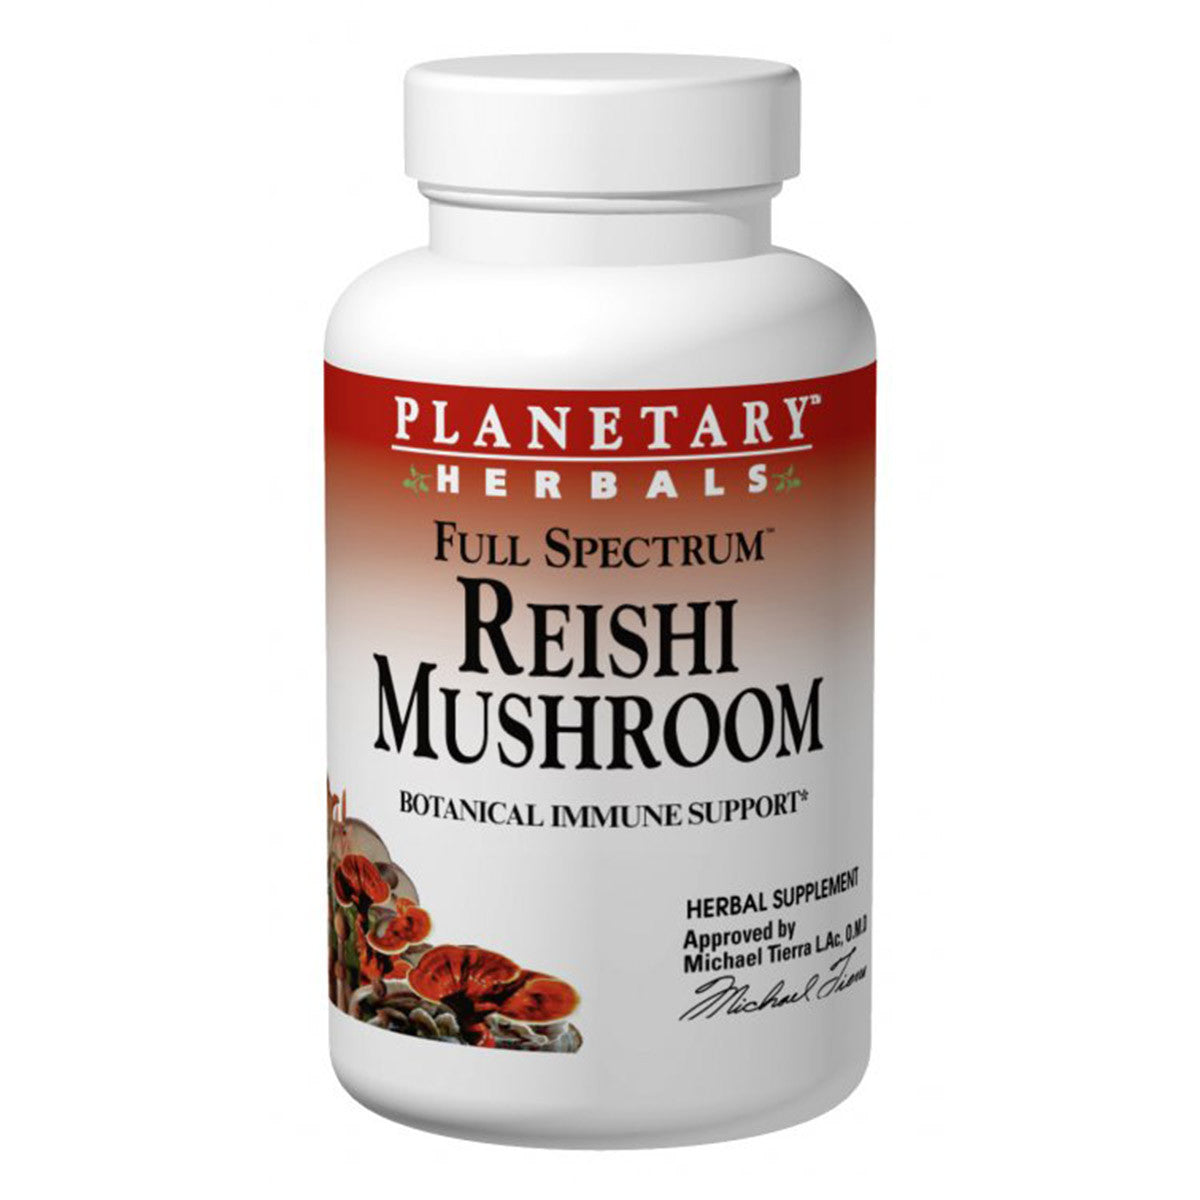 Primary image of Full Spectrum Reishi Mushroom